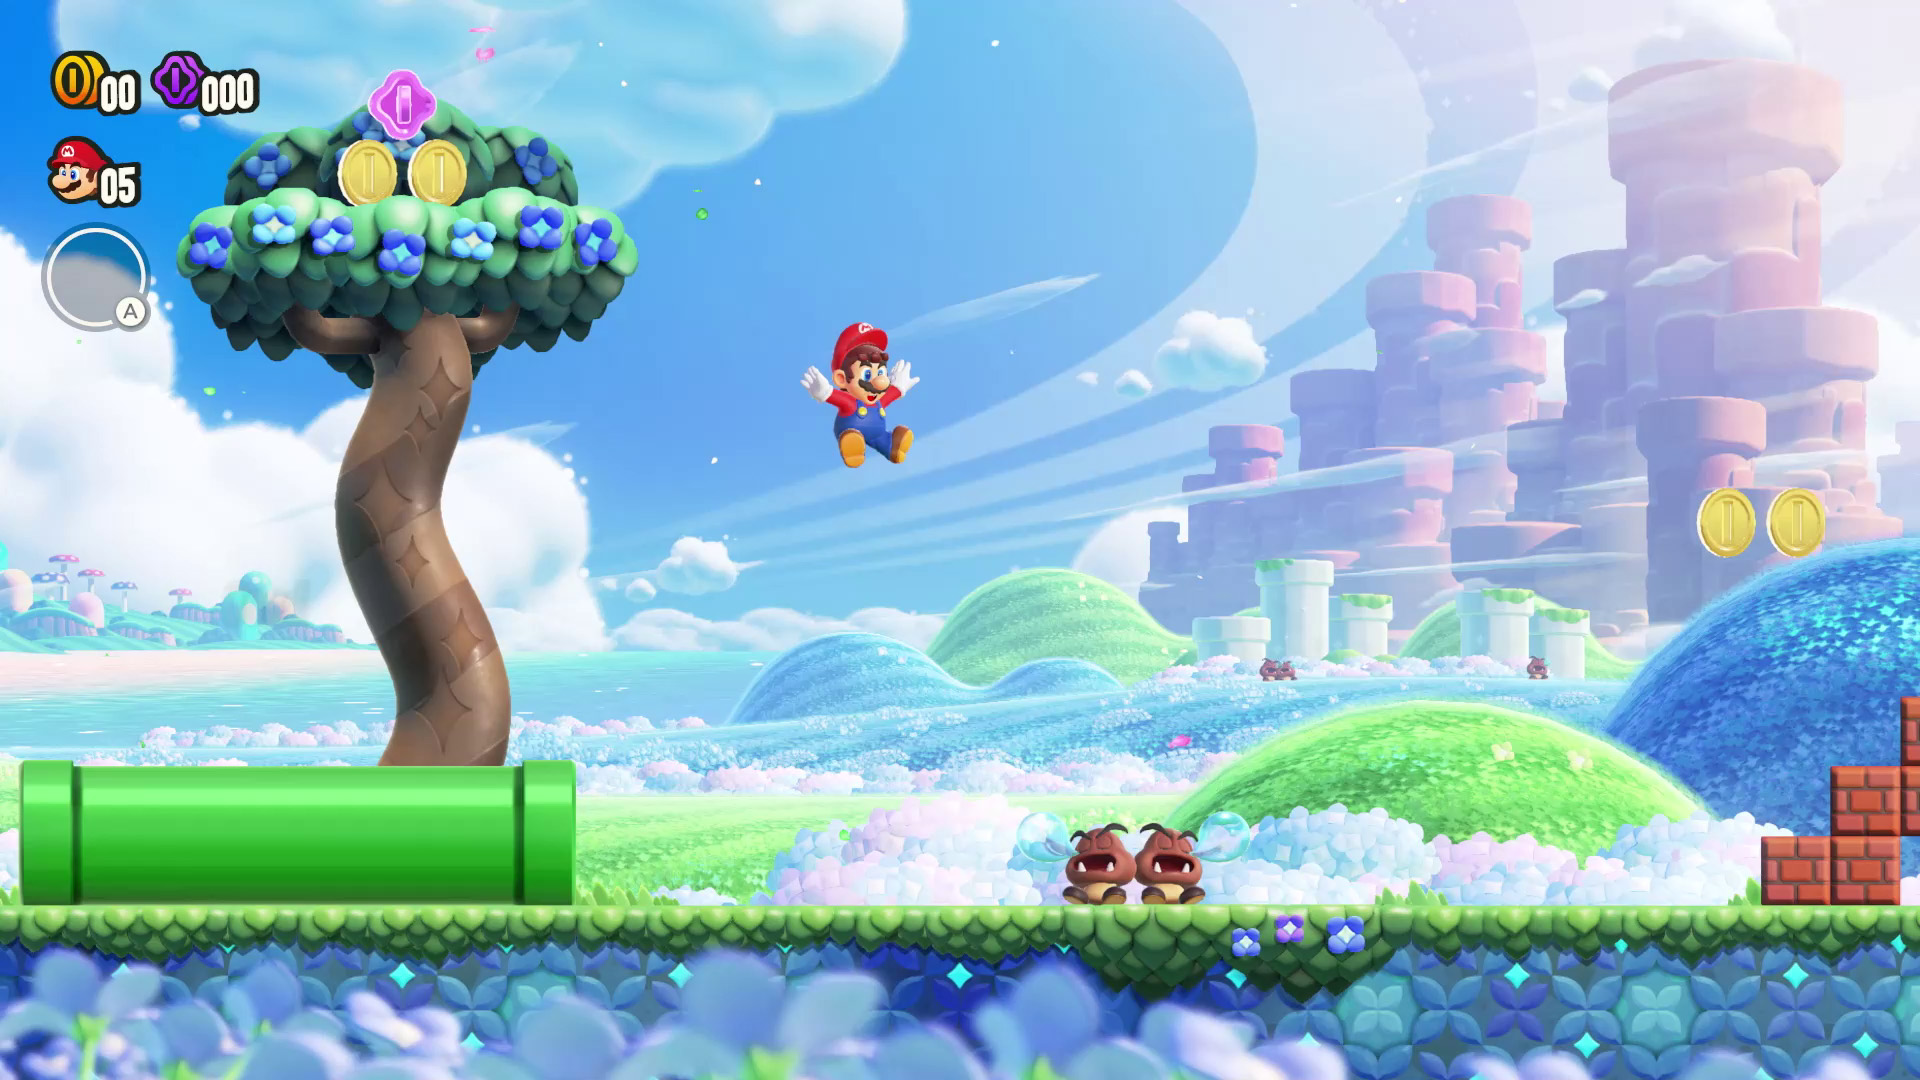 Super Mario Bros. Wonder - Meus Jogos